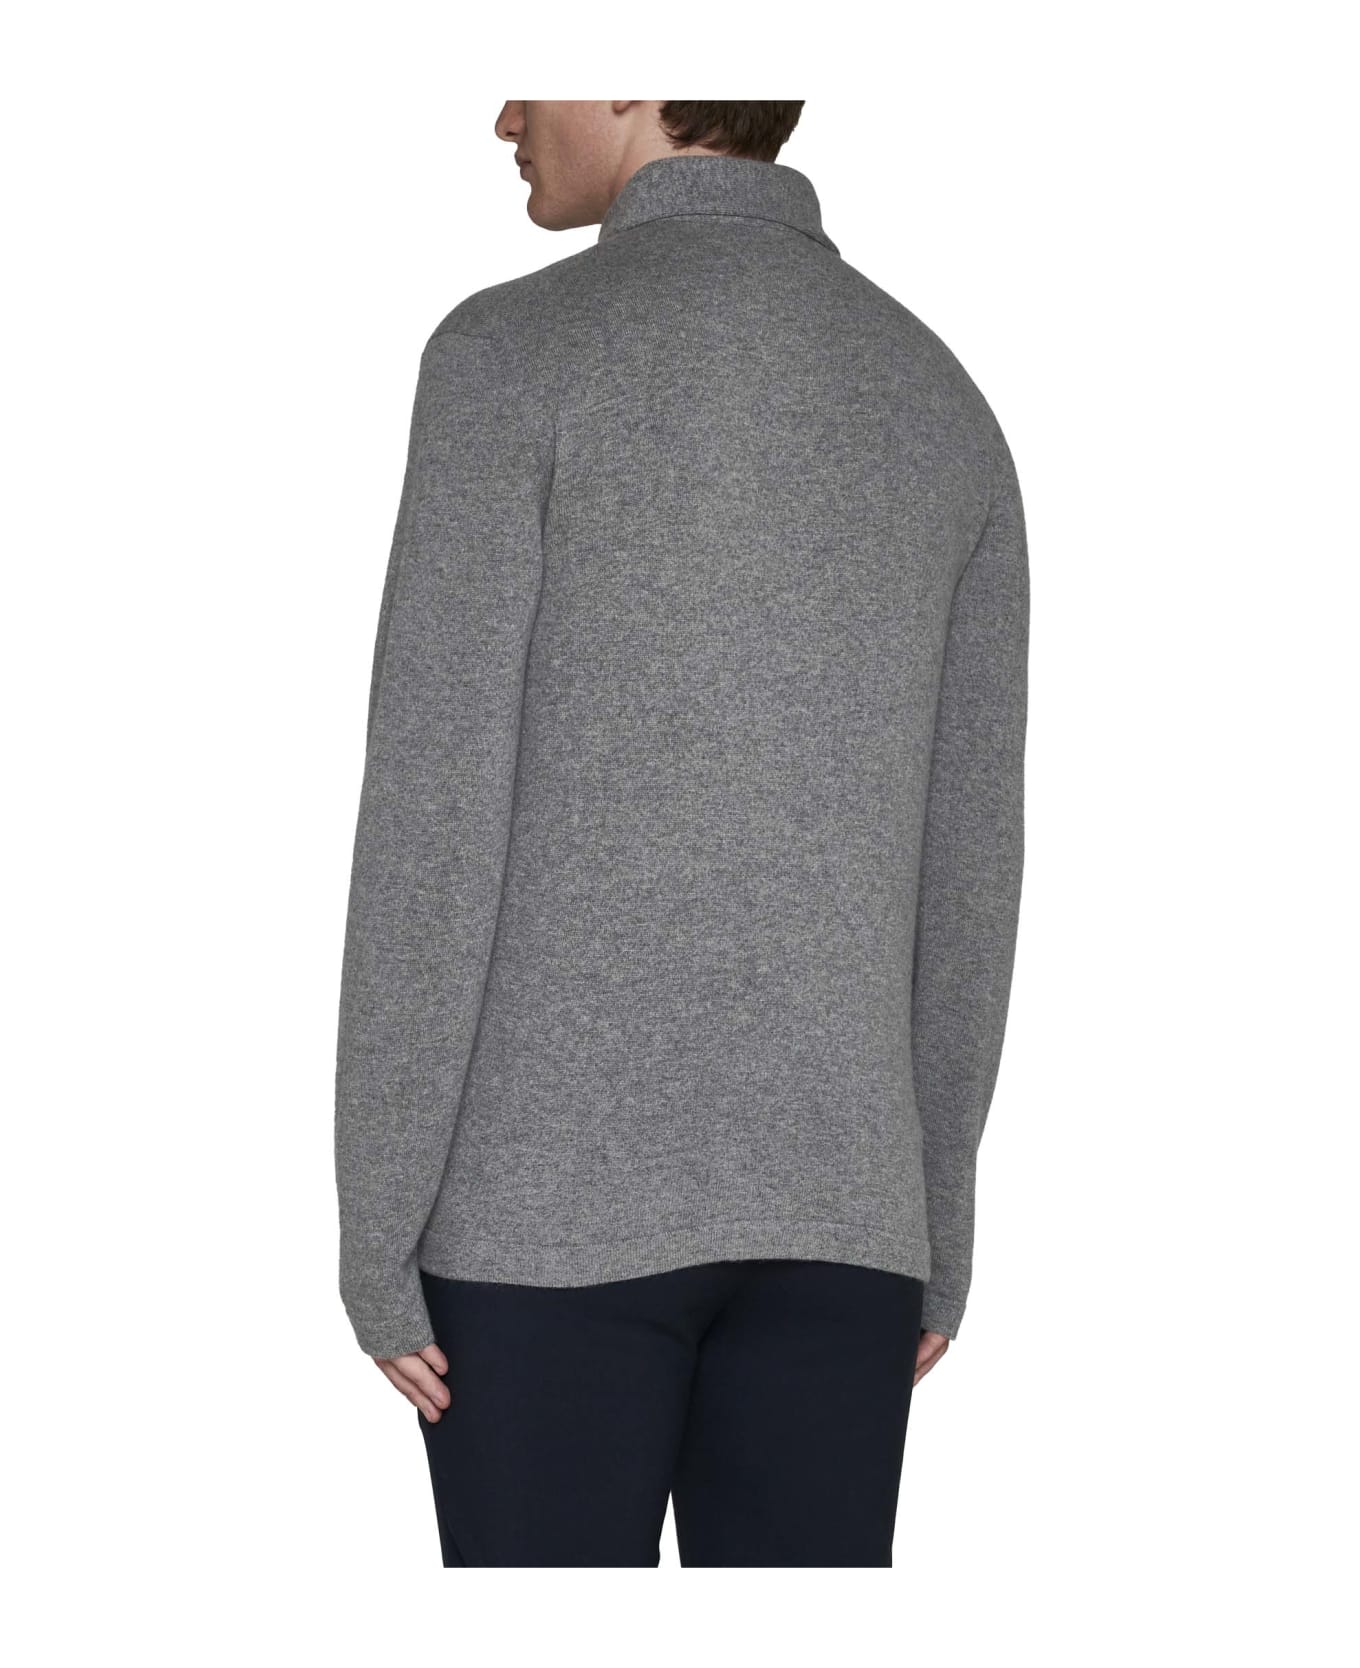 Piacenza Cashmere Shirt - Light grey